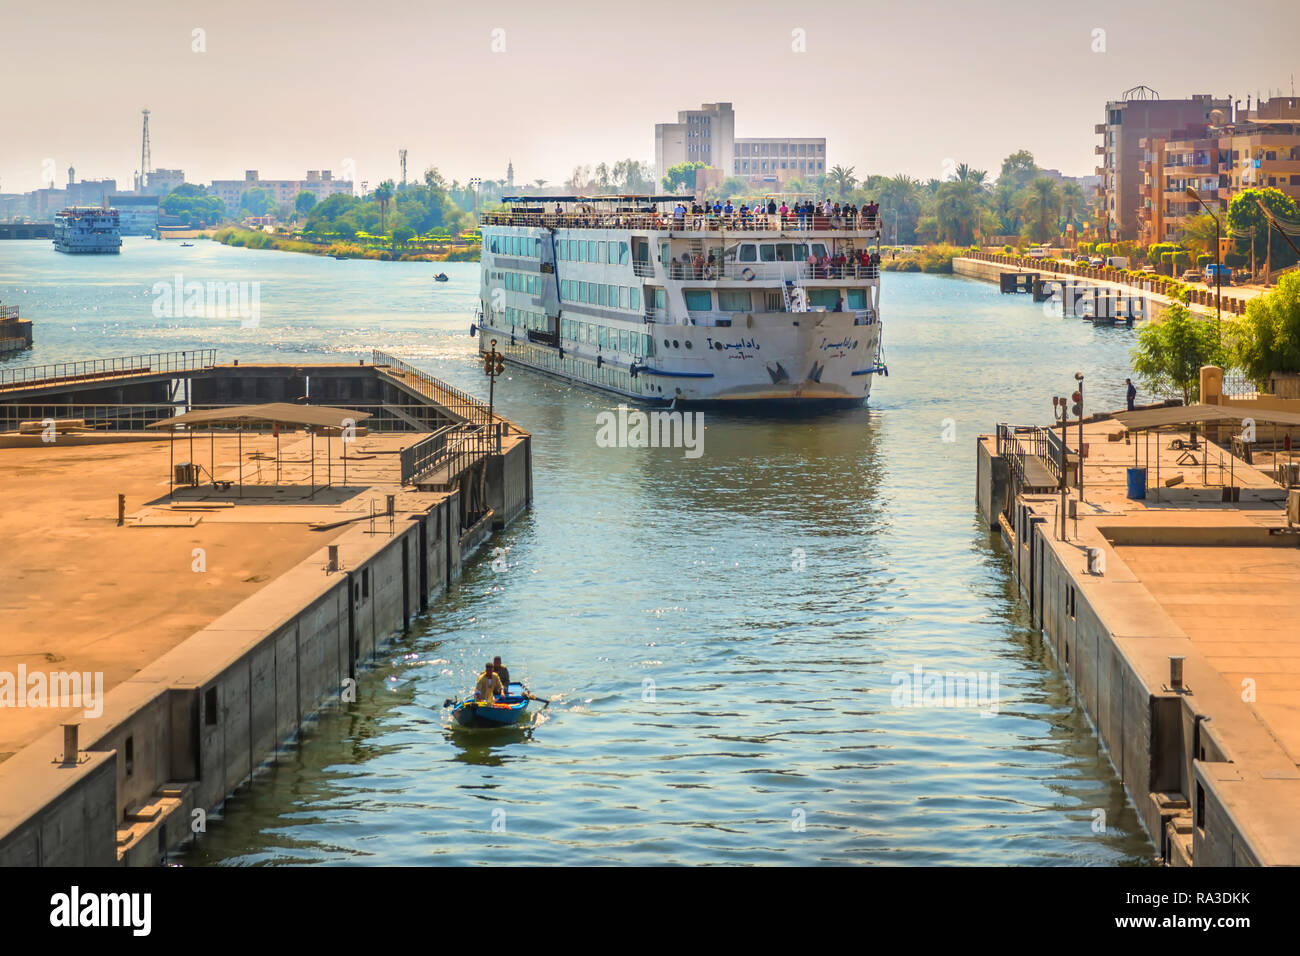 Nile river, Egypt - Nov 7th 2018 - A big touristic cruiser heading to a lock in the Nile River in Egypt Stock Photo